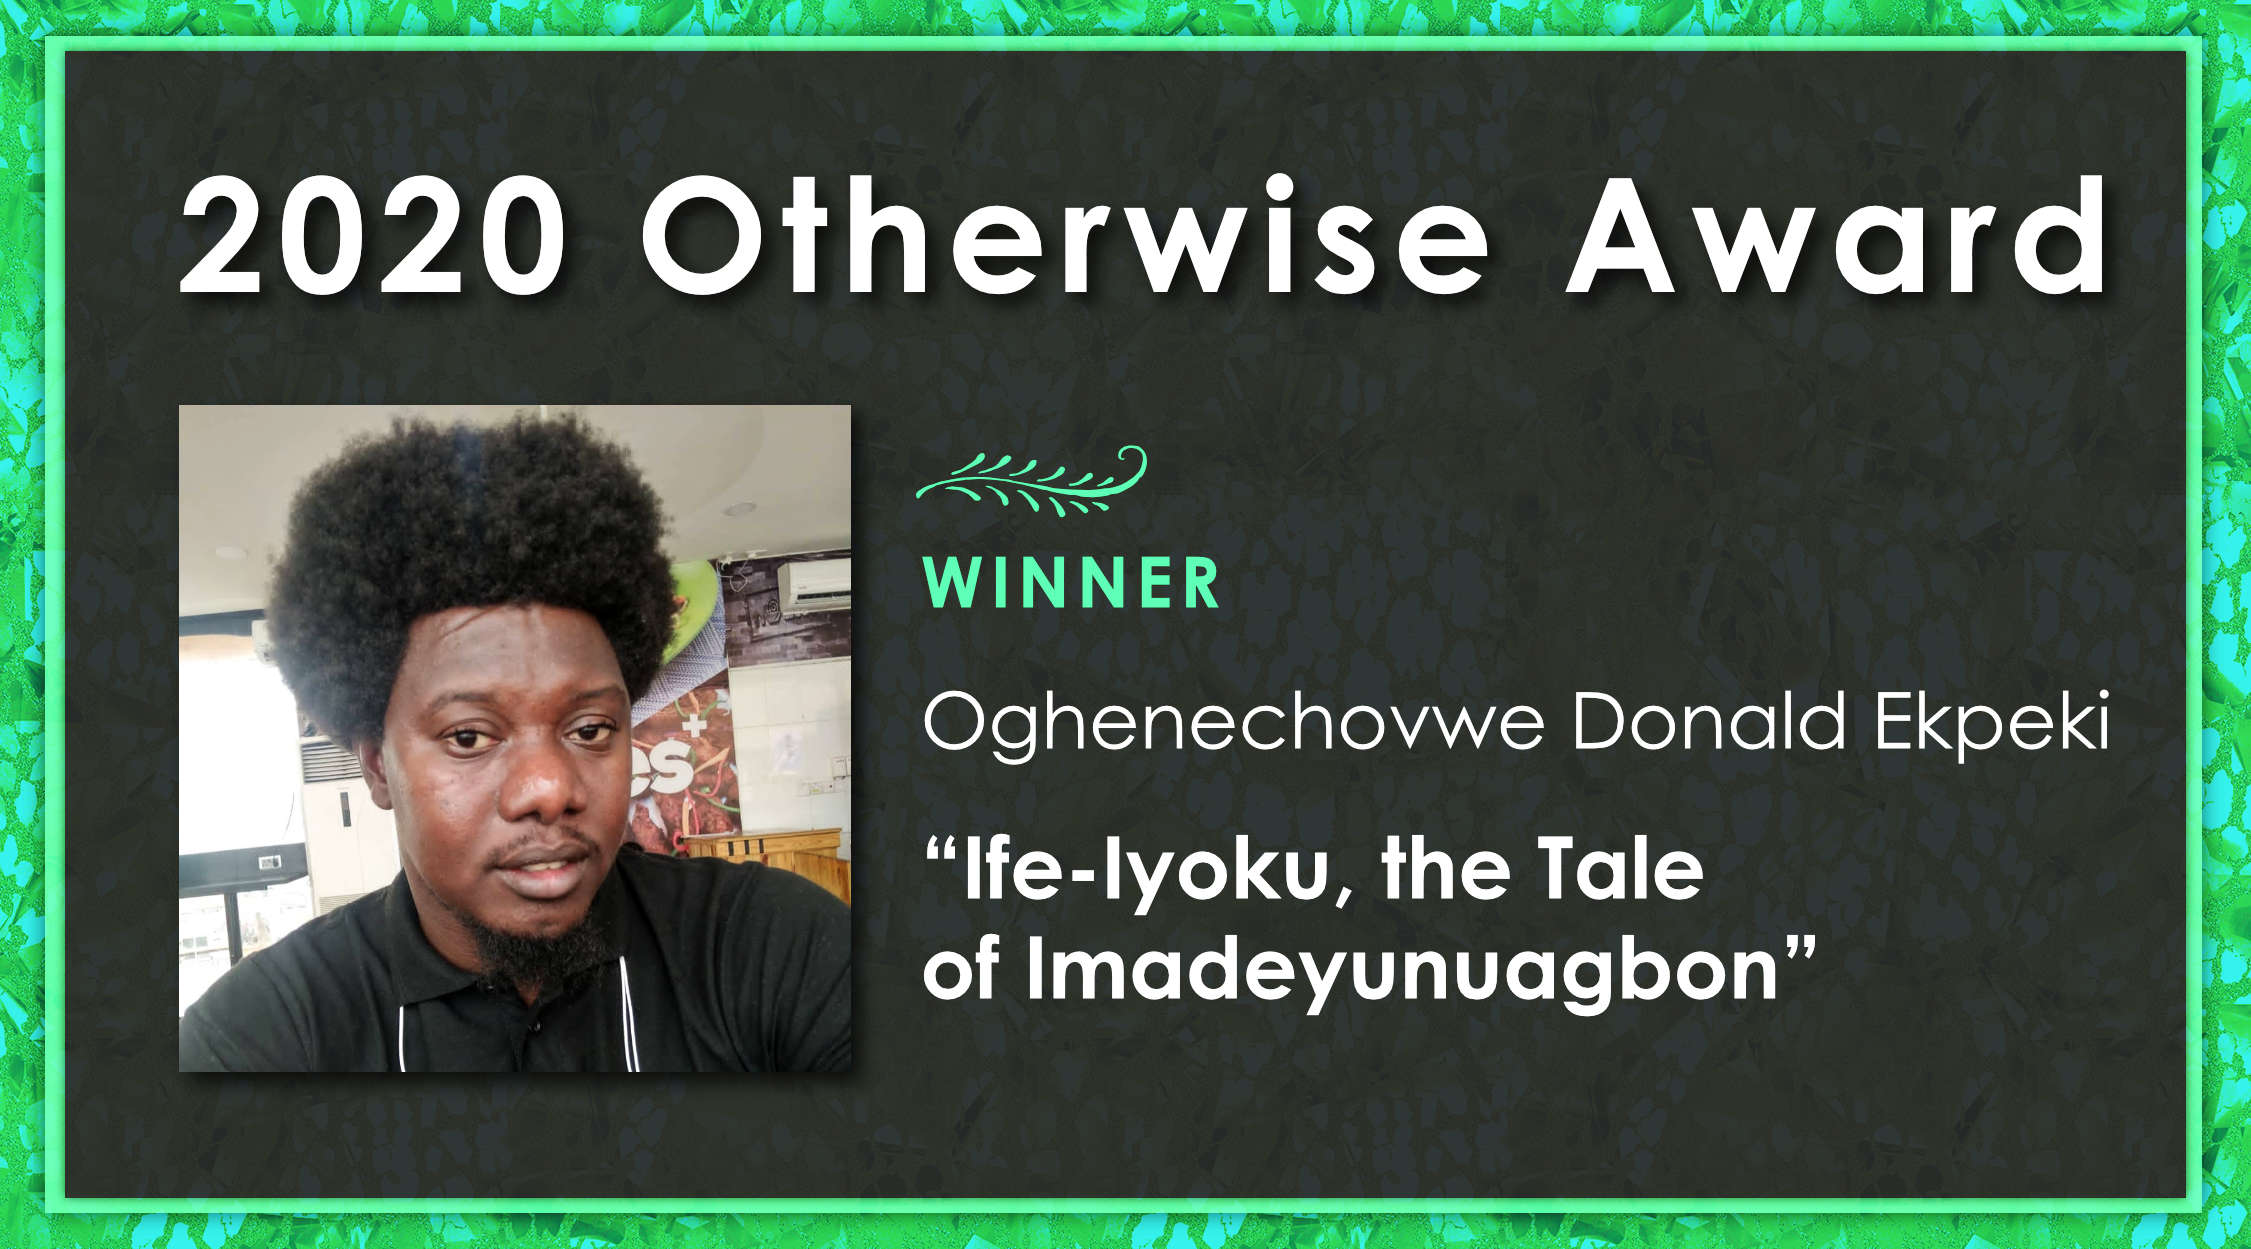 2020 Otherwise Award winner Oghenechovwe Donald Ekpeki, “Ife-Iyoku, the Tale of Imadeyunuagbon”